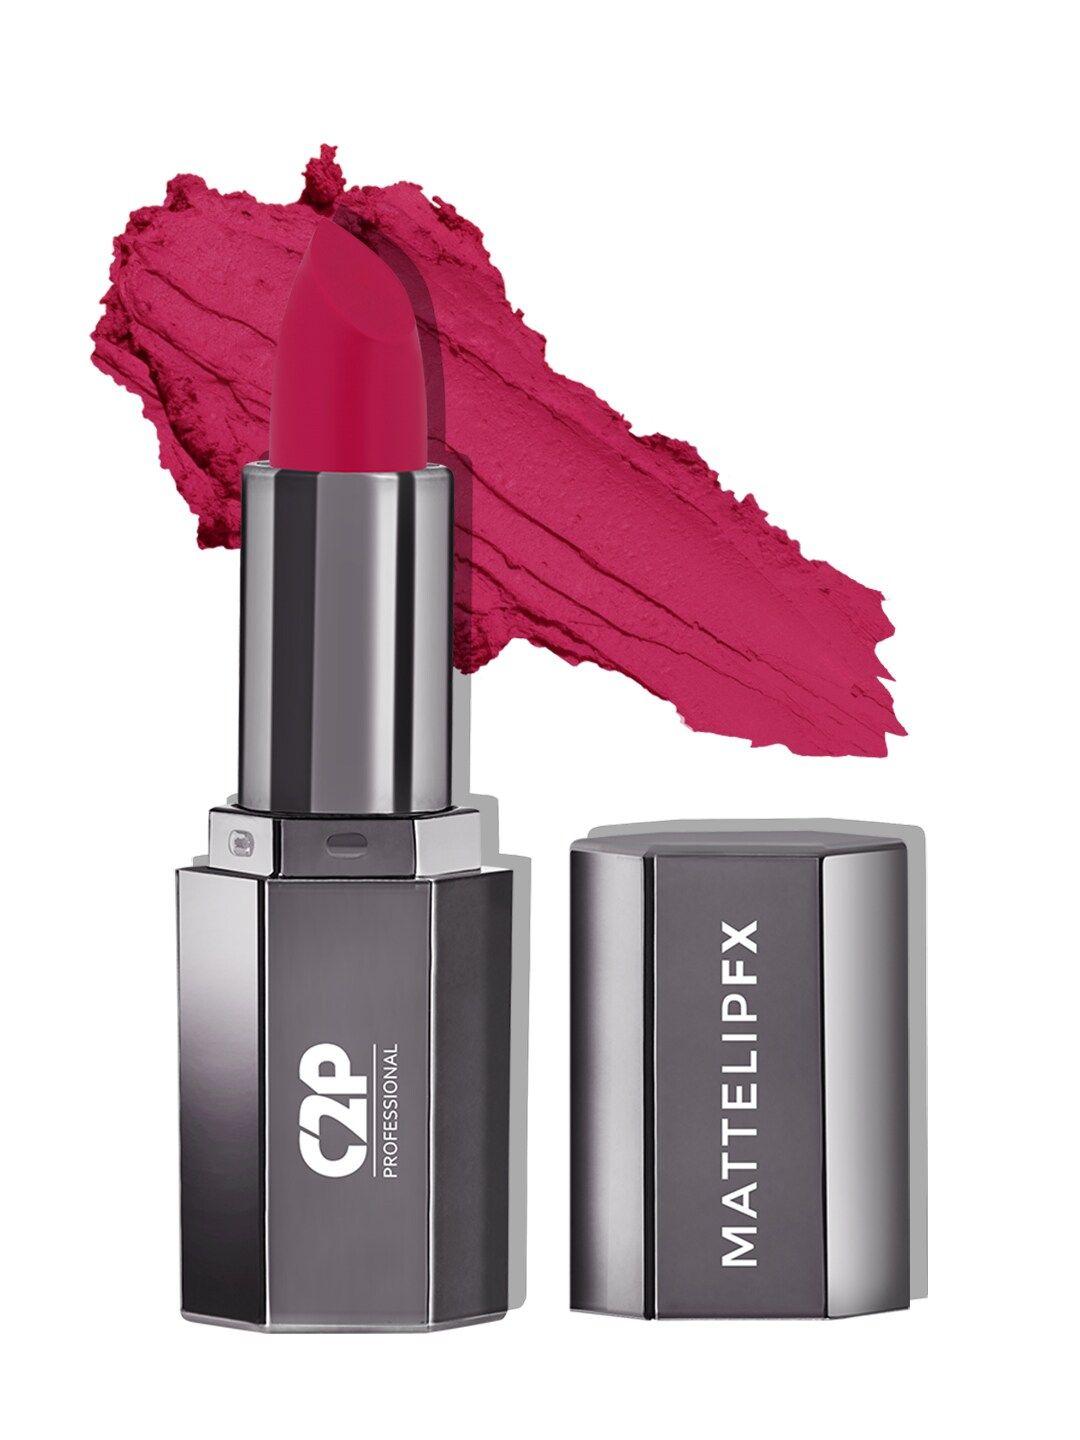 c2p professional makeup mattelipfx long-lasting lipstick - cherry pop 07